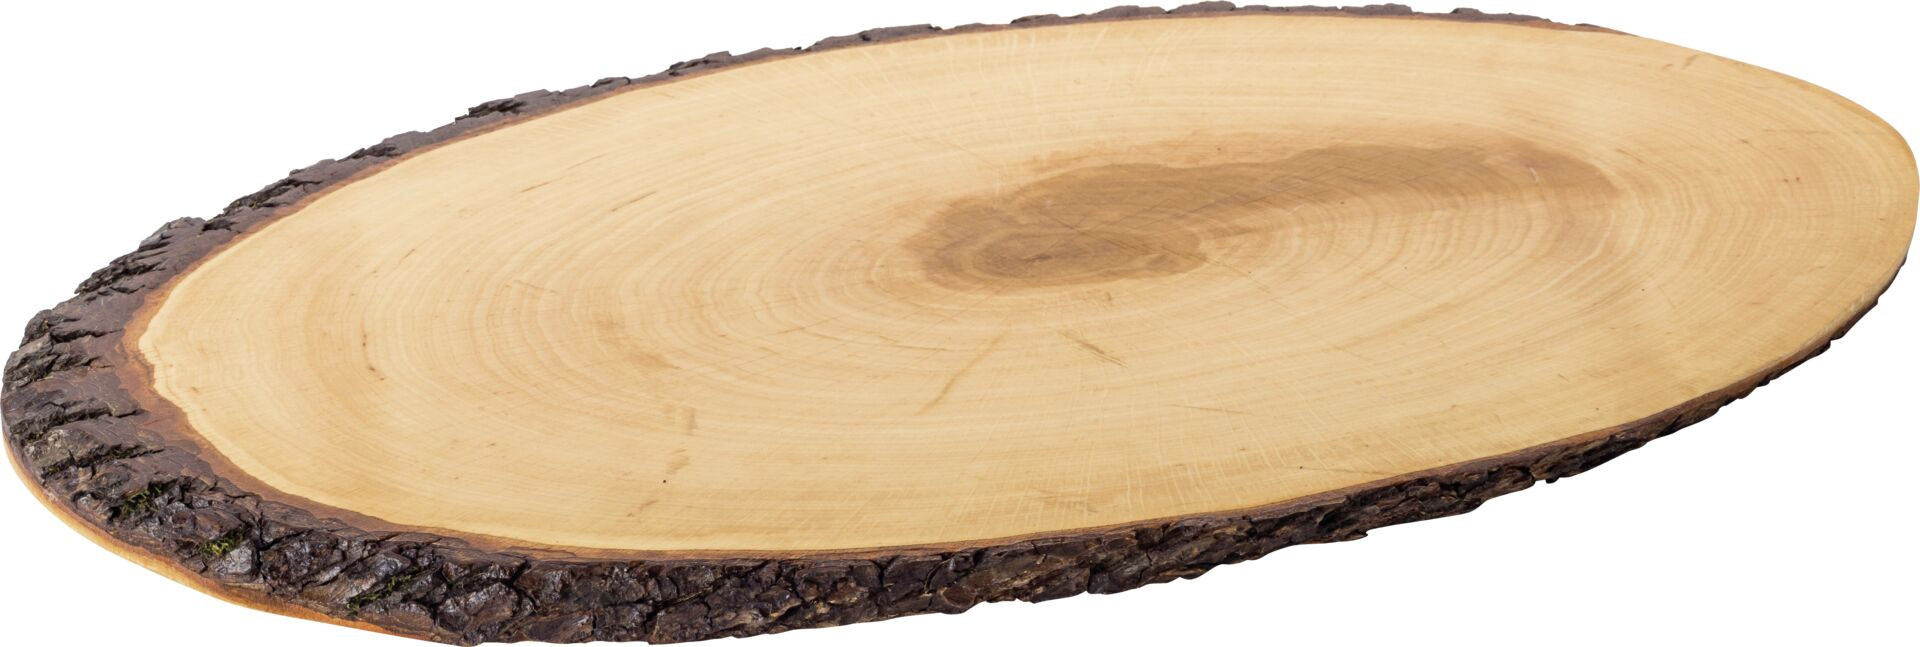 Rindenholzbrett oval 60 cm